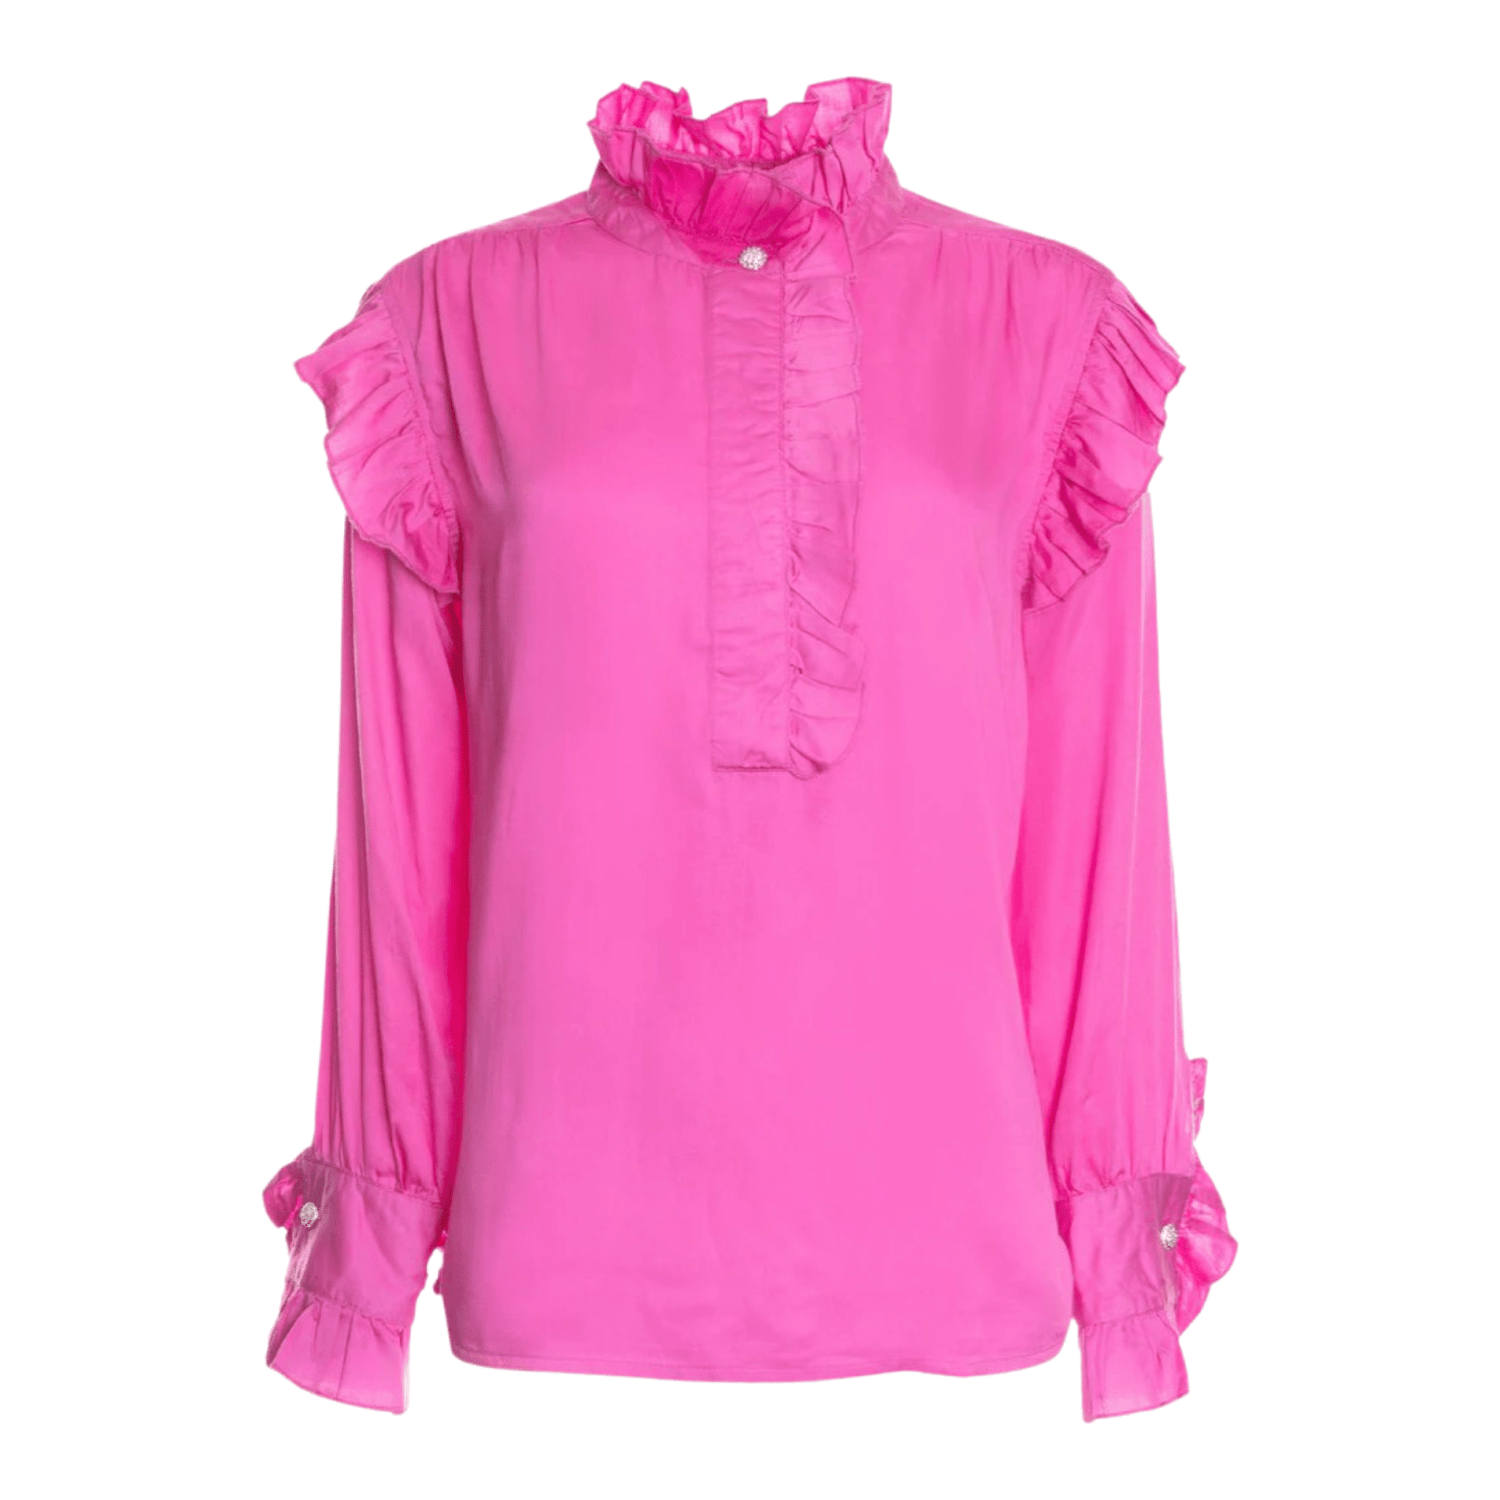 Achha - Jannie Shirt - pink - Merle og Wilde